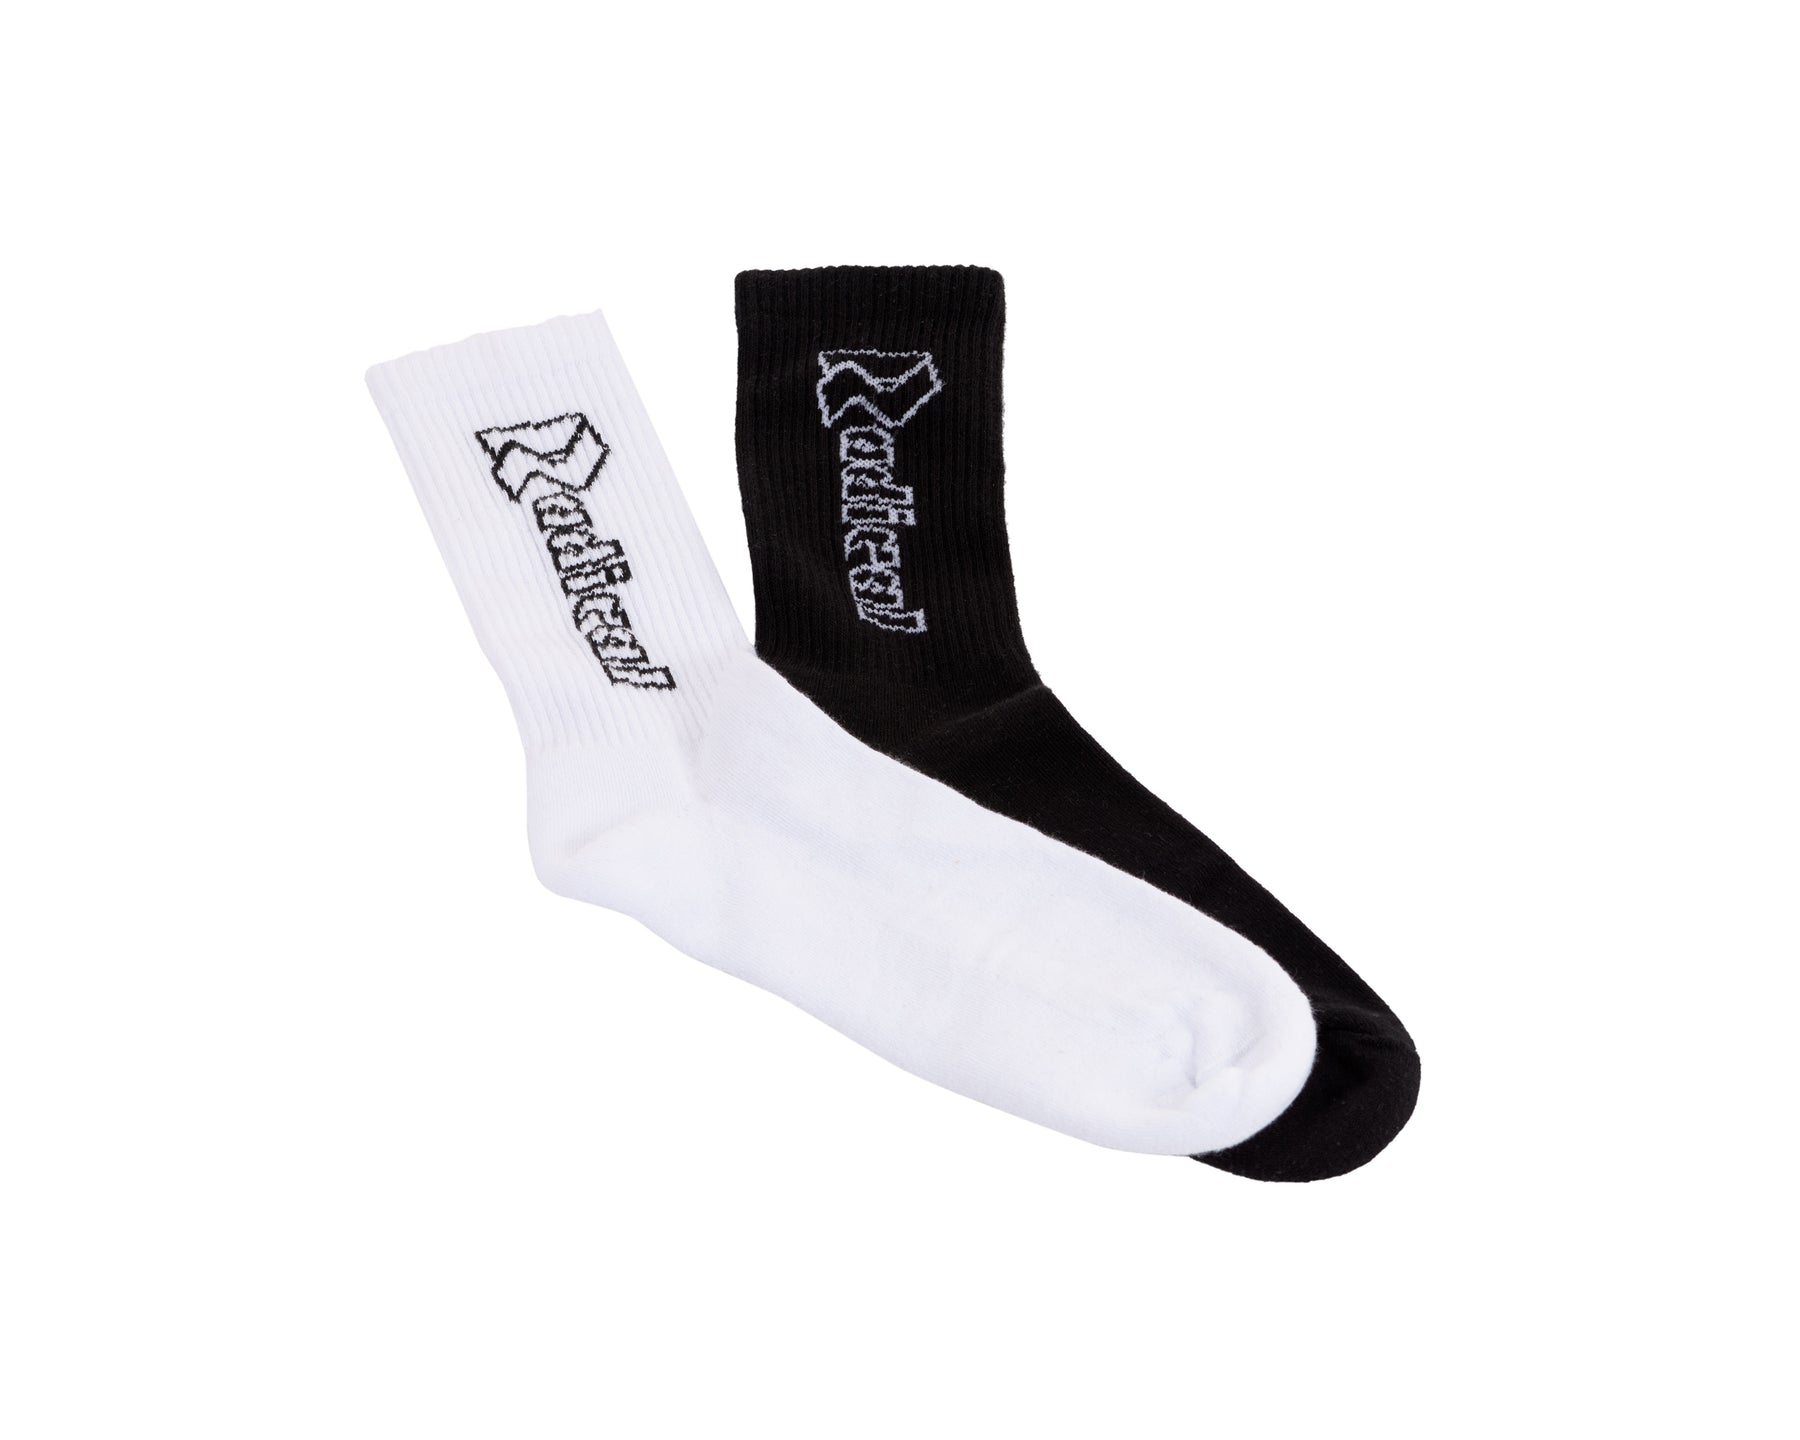 Radical Calzini Everyday Skate Socks